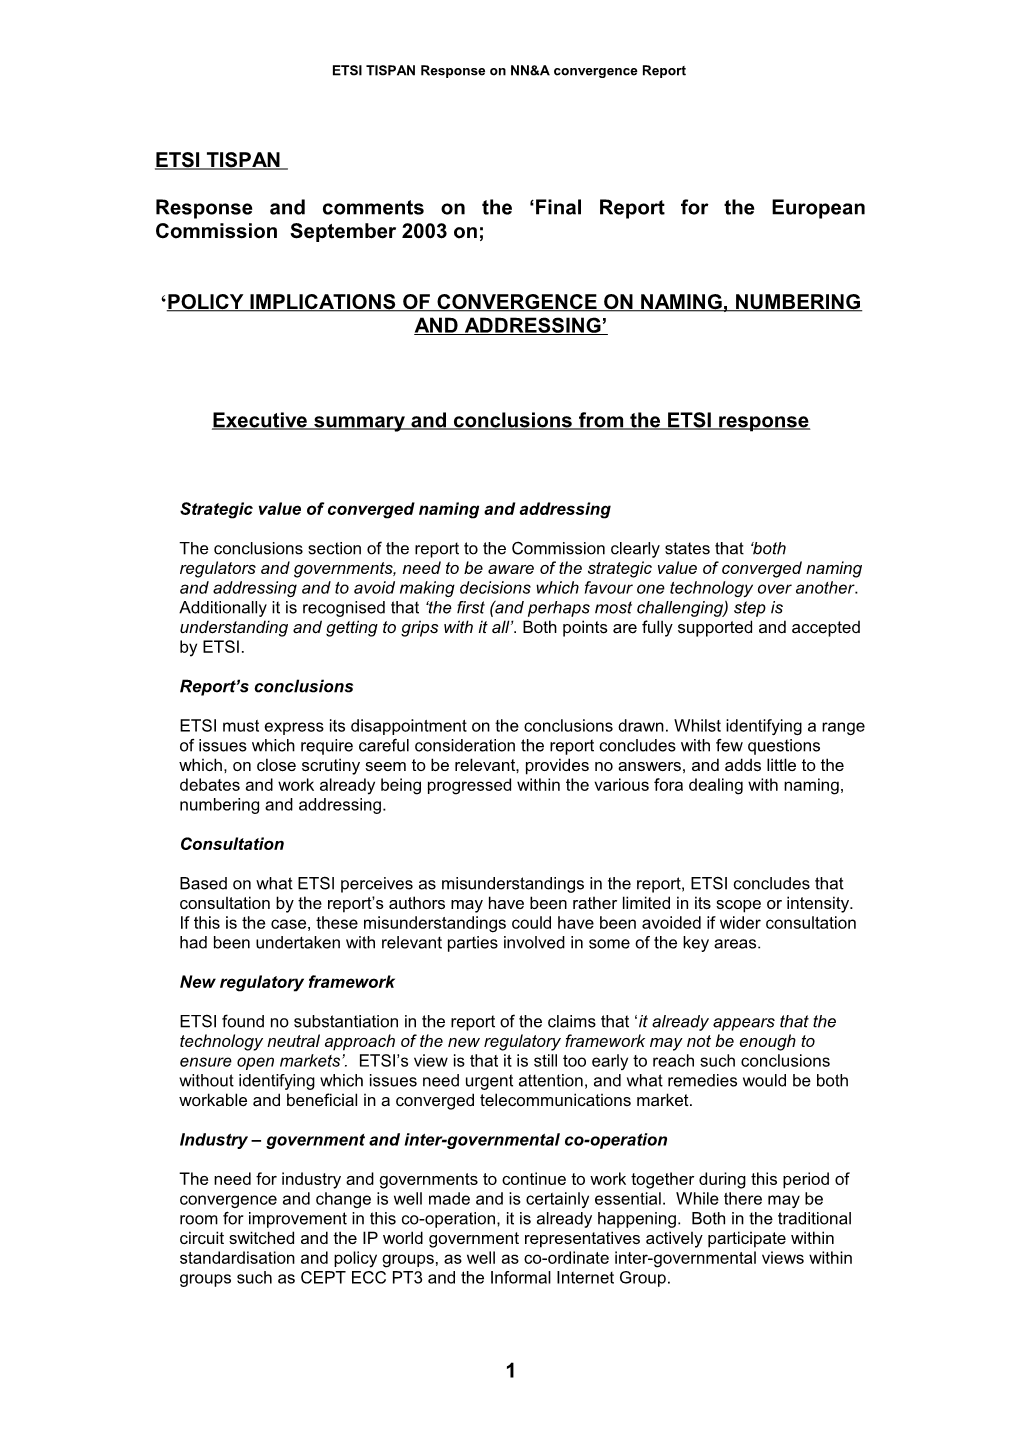 ETSI TISPAN Response on NN&A Convergence Report